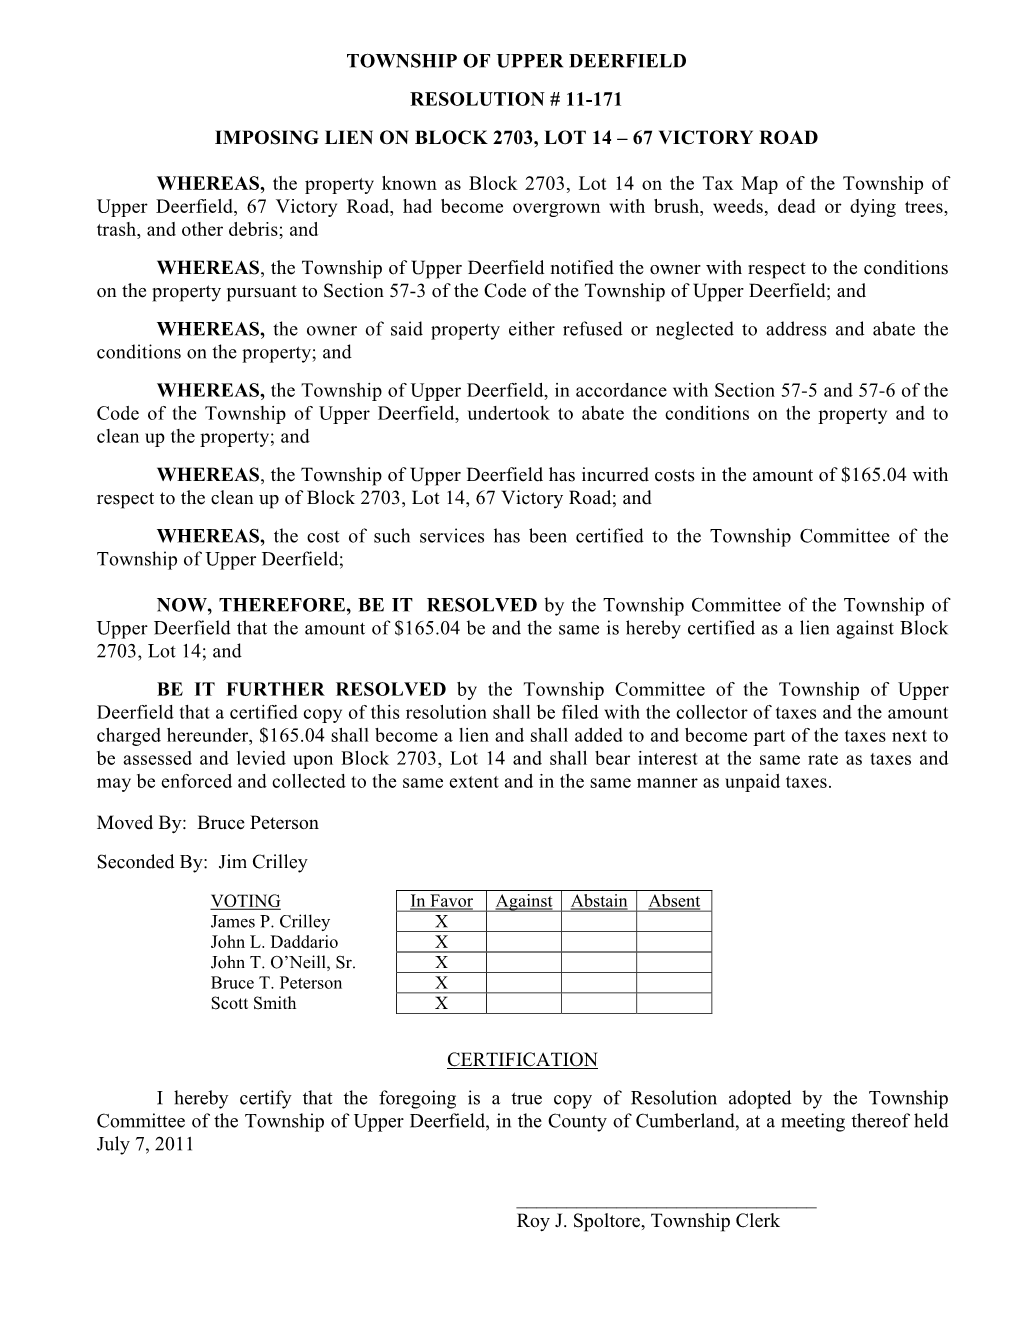 Township of Upper Deerfield Resolution # 11-171